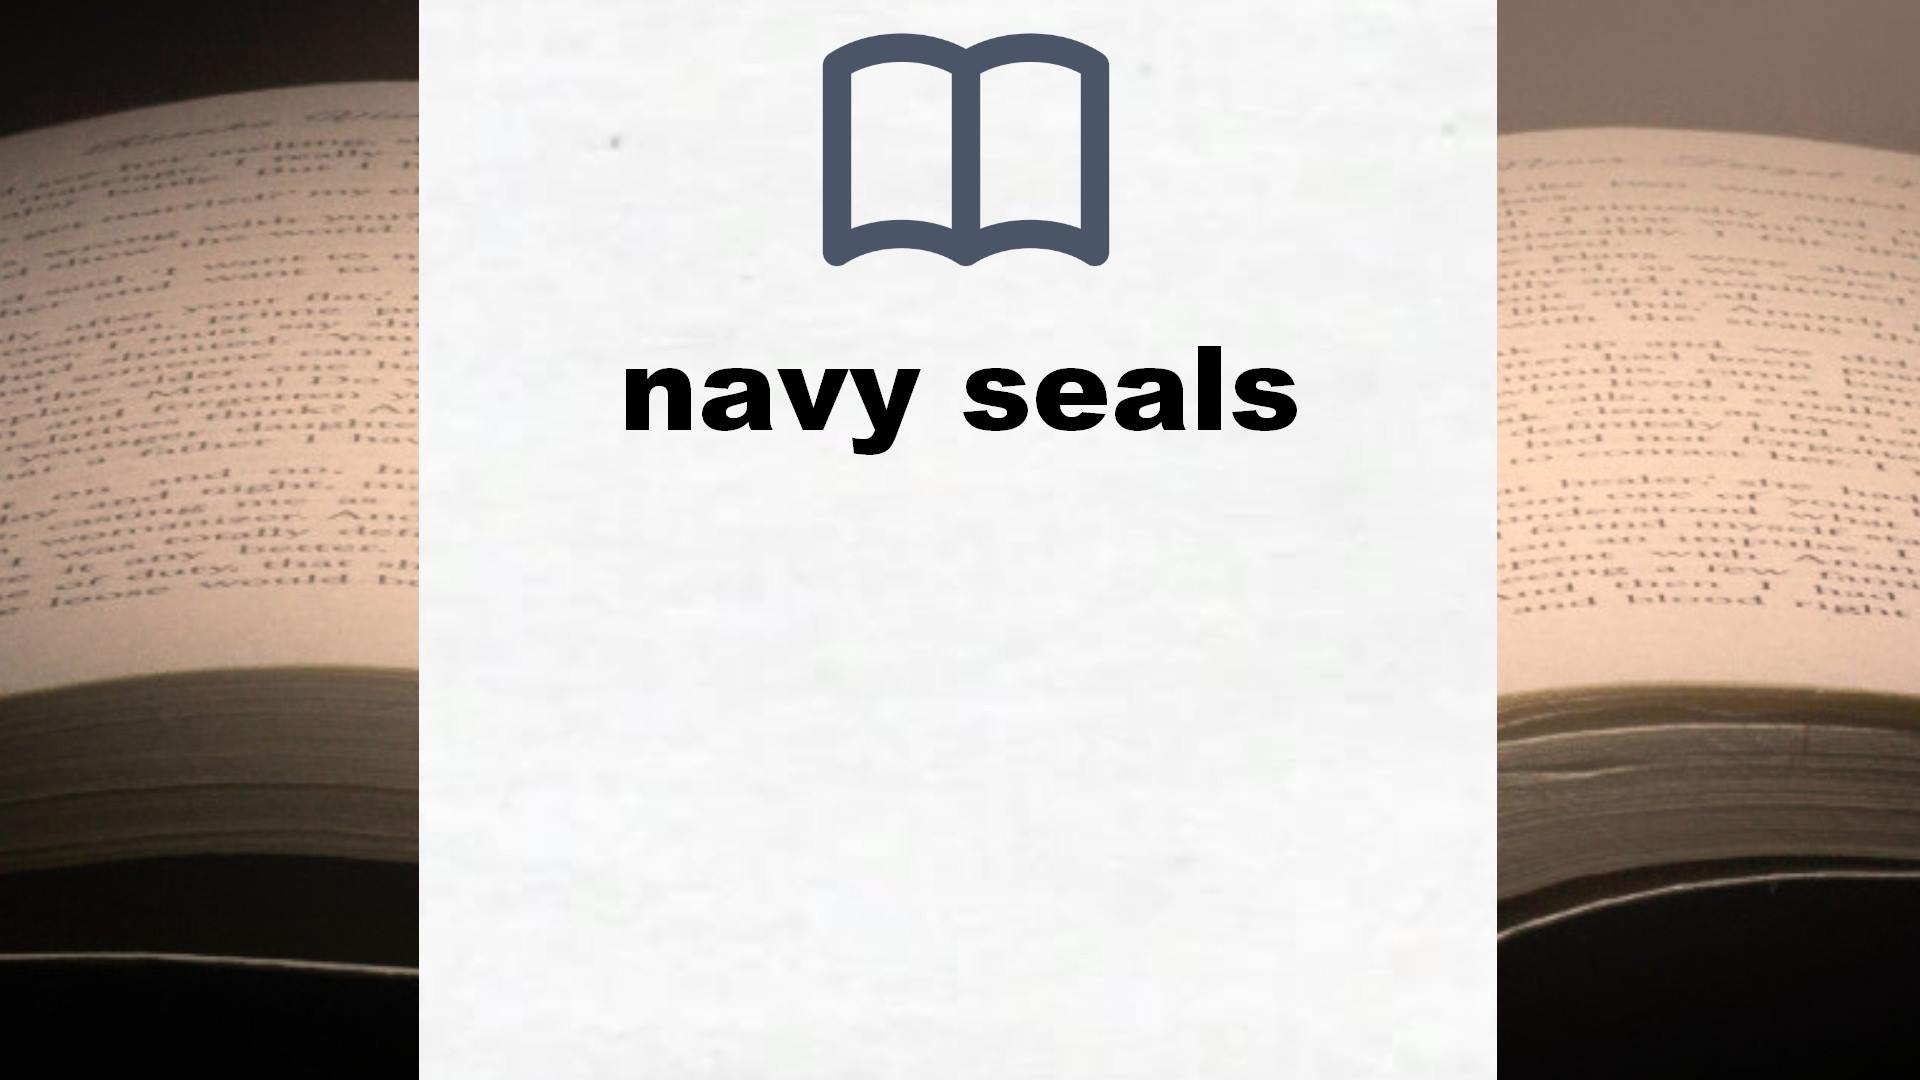 Libros sobre navy seals